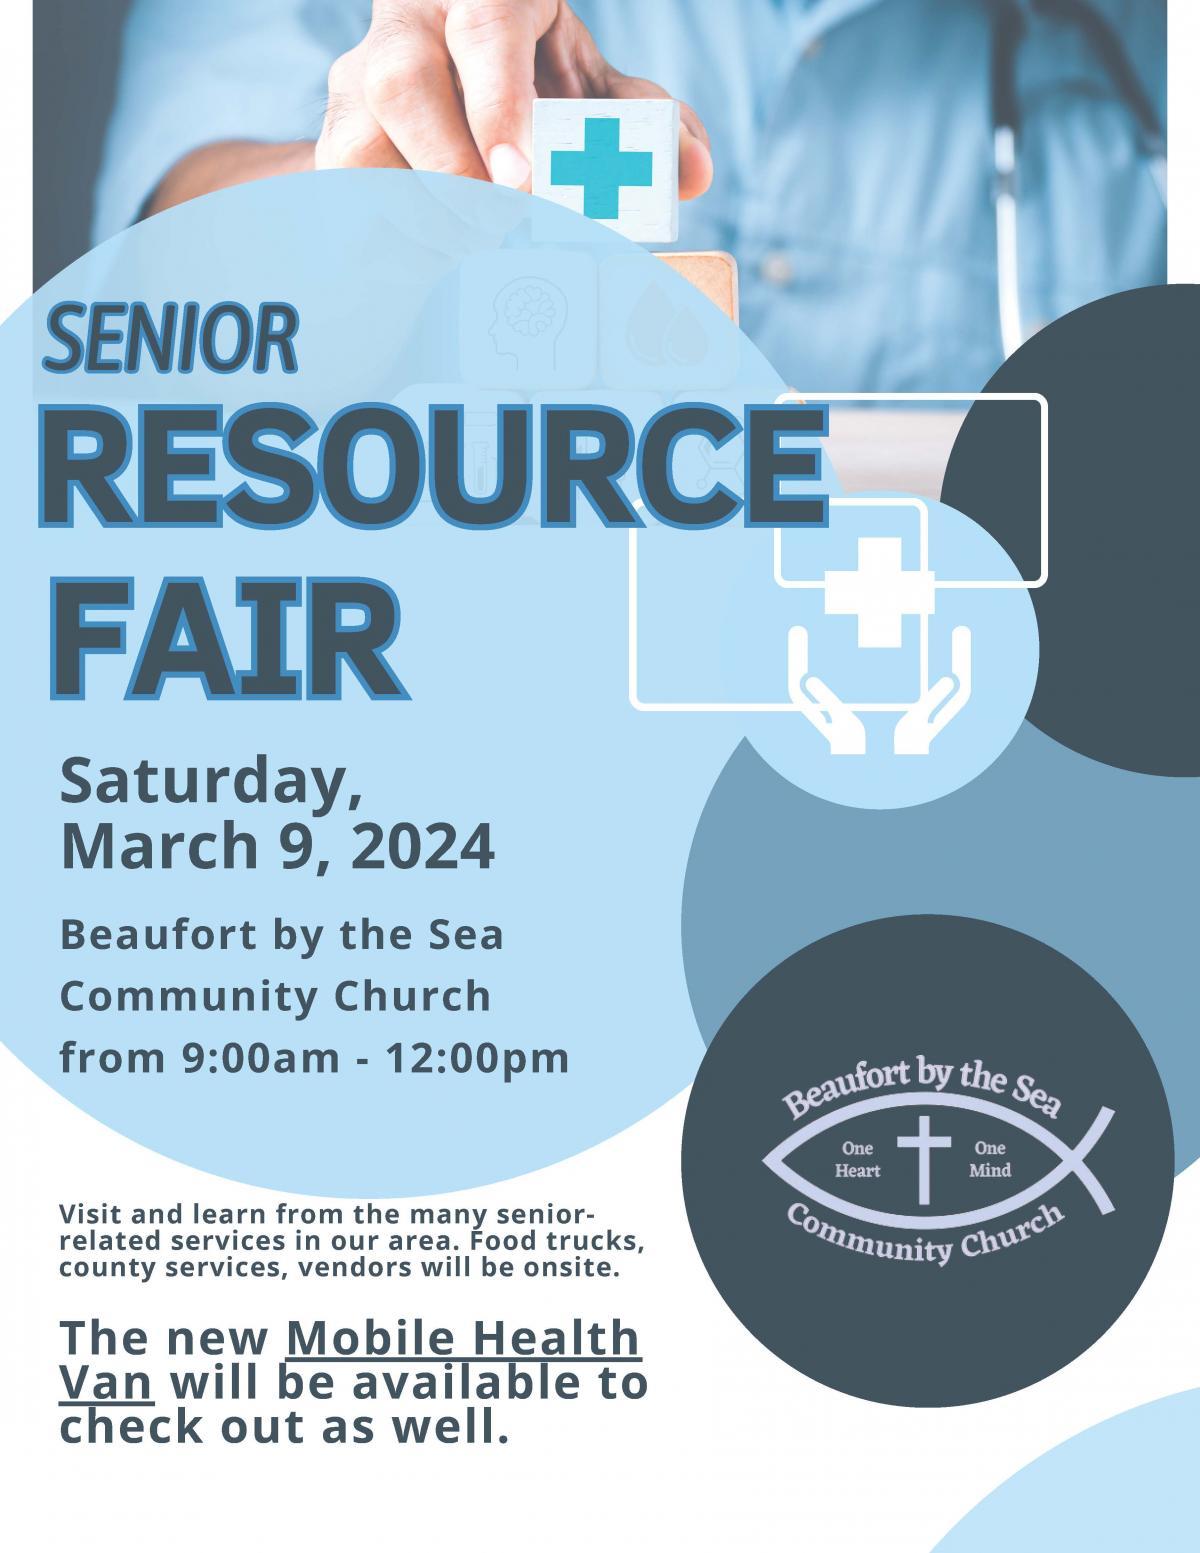 Senior Resource Fair March 9